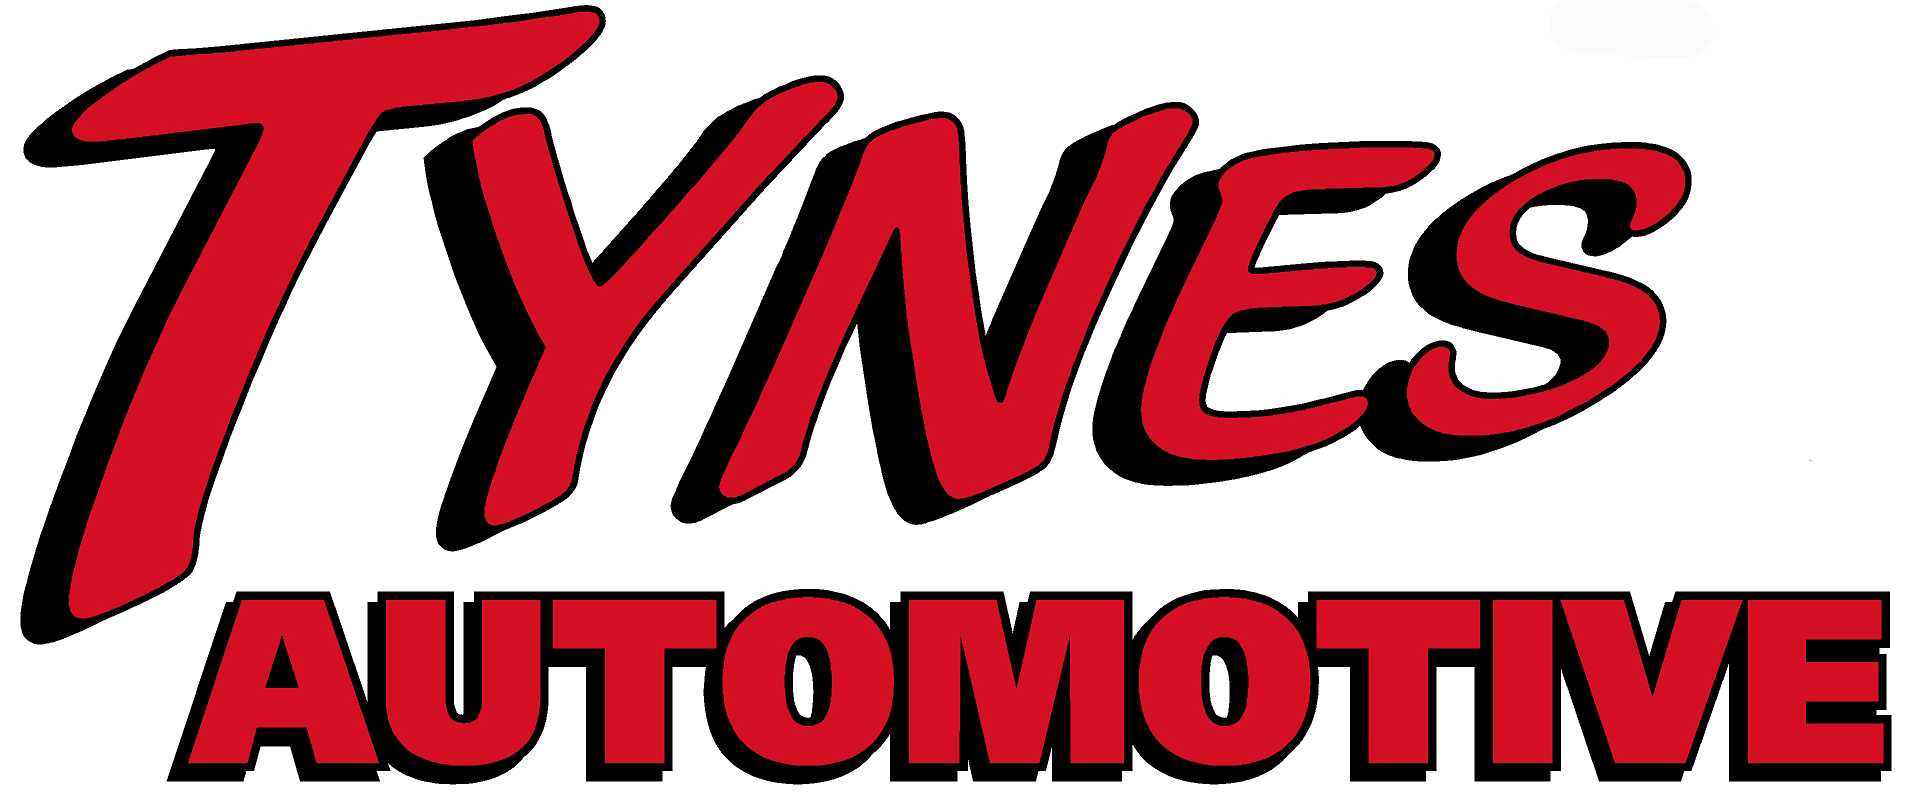 Tynes Automotive || Auto Mechanic & Car Repair